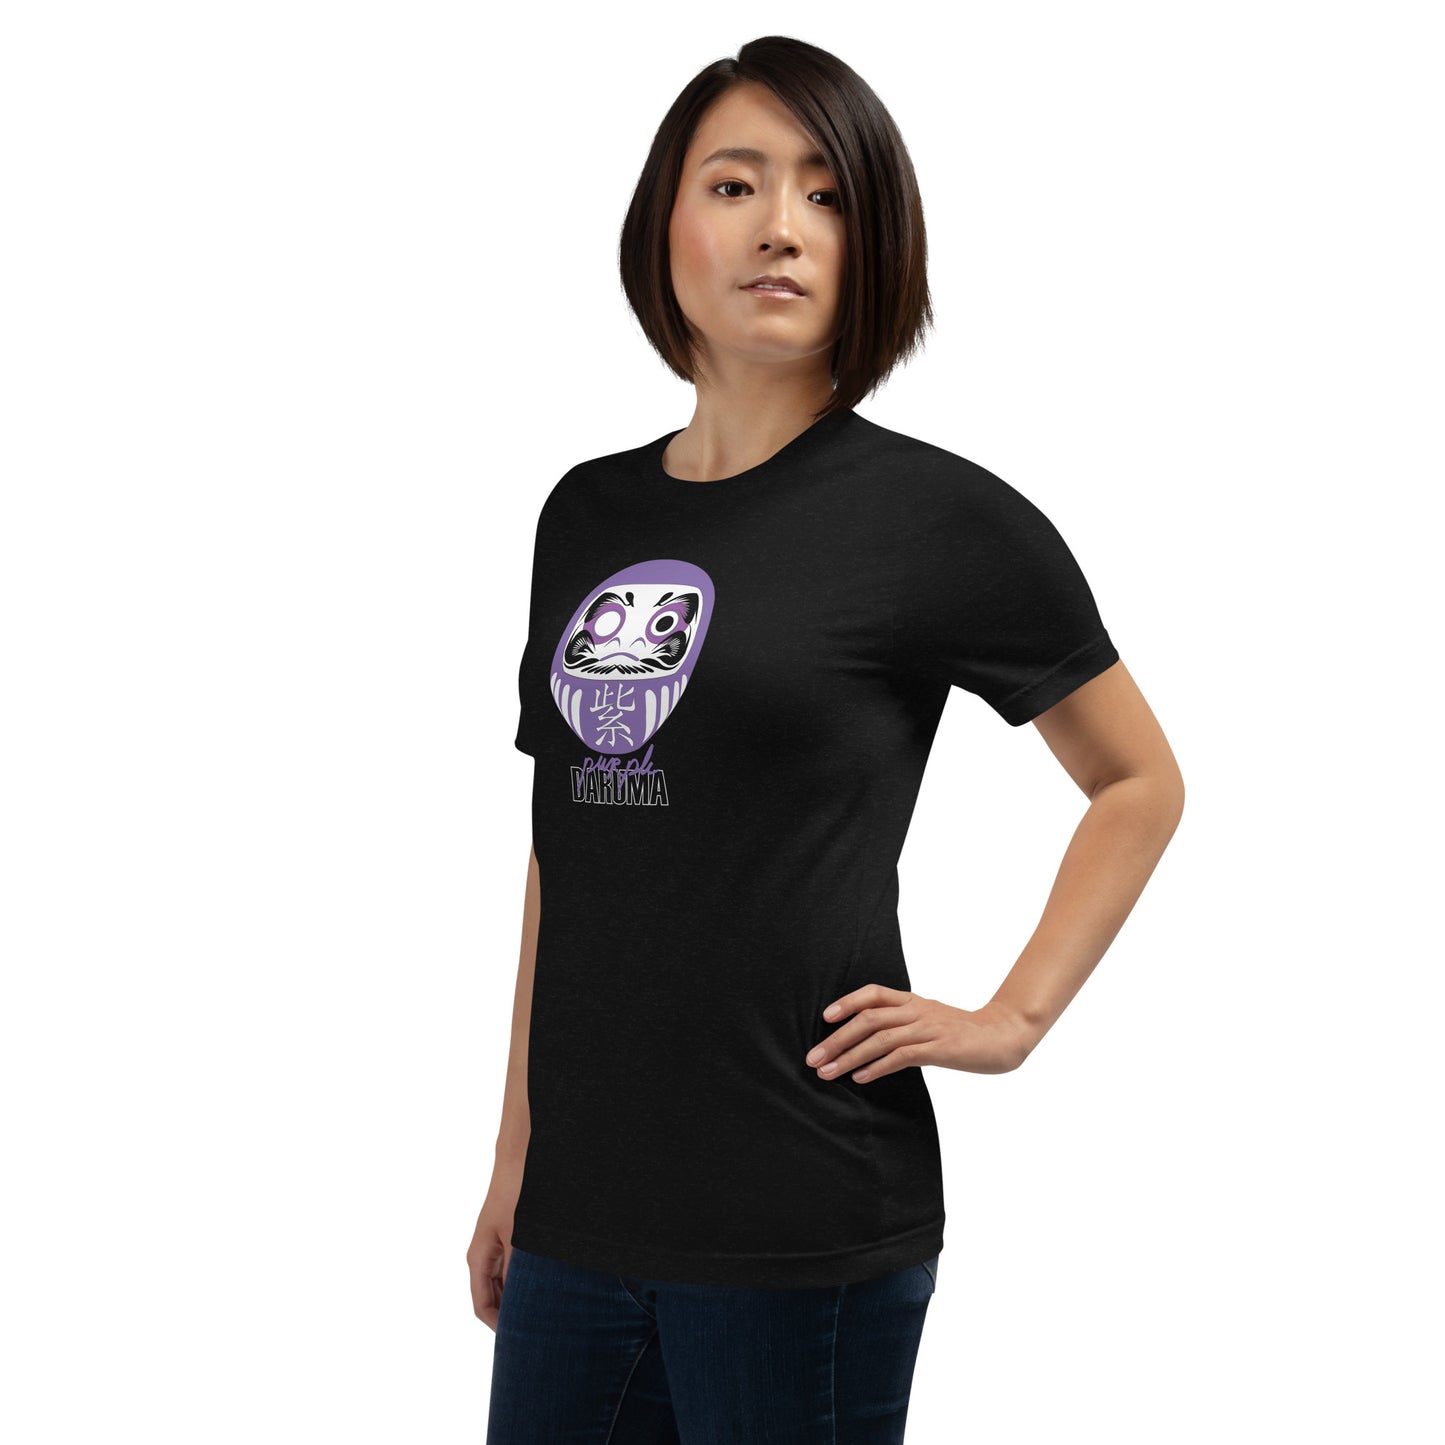 Unisex purple Daruma t-shirt